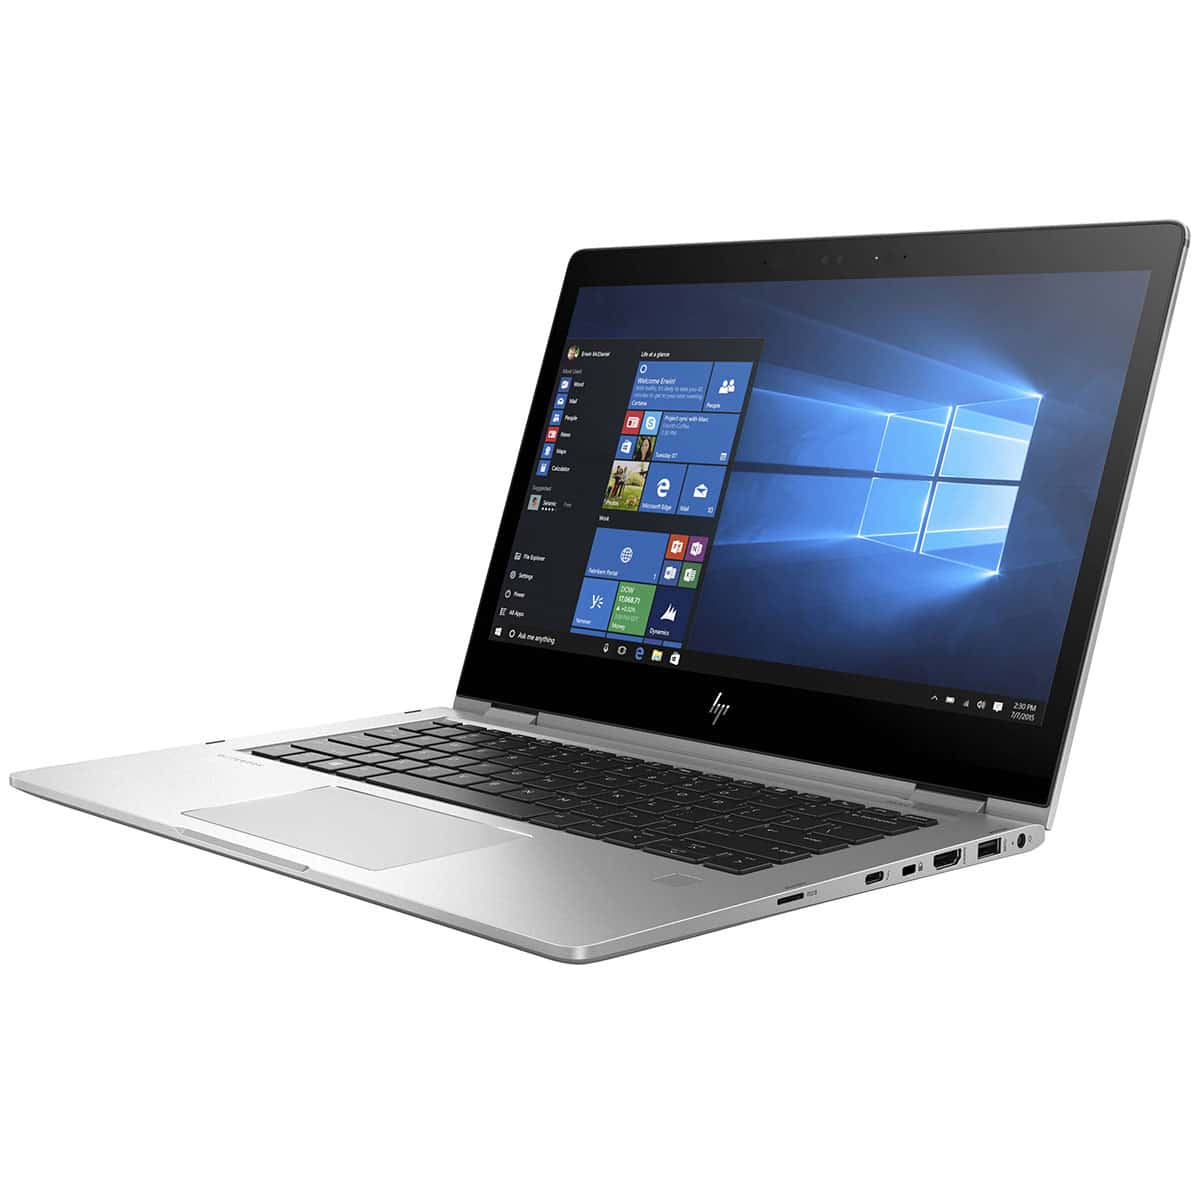 HP EliteBook x360 1030 G2 Notebook PC Intel Core i5 7th Gen 8GB ...